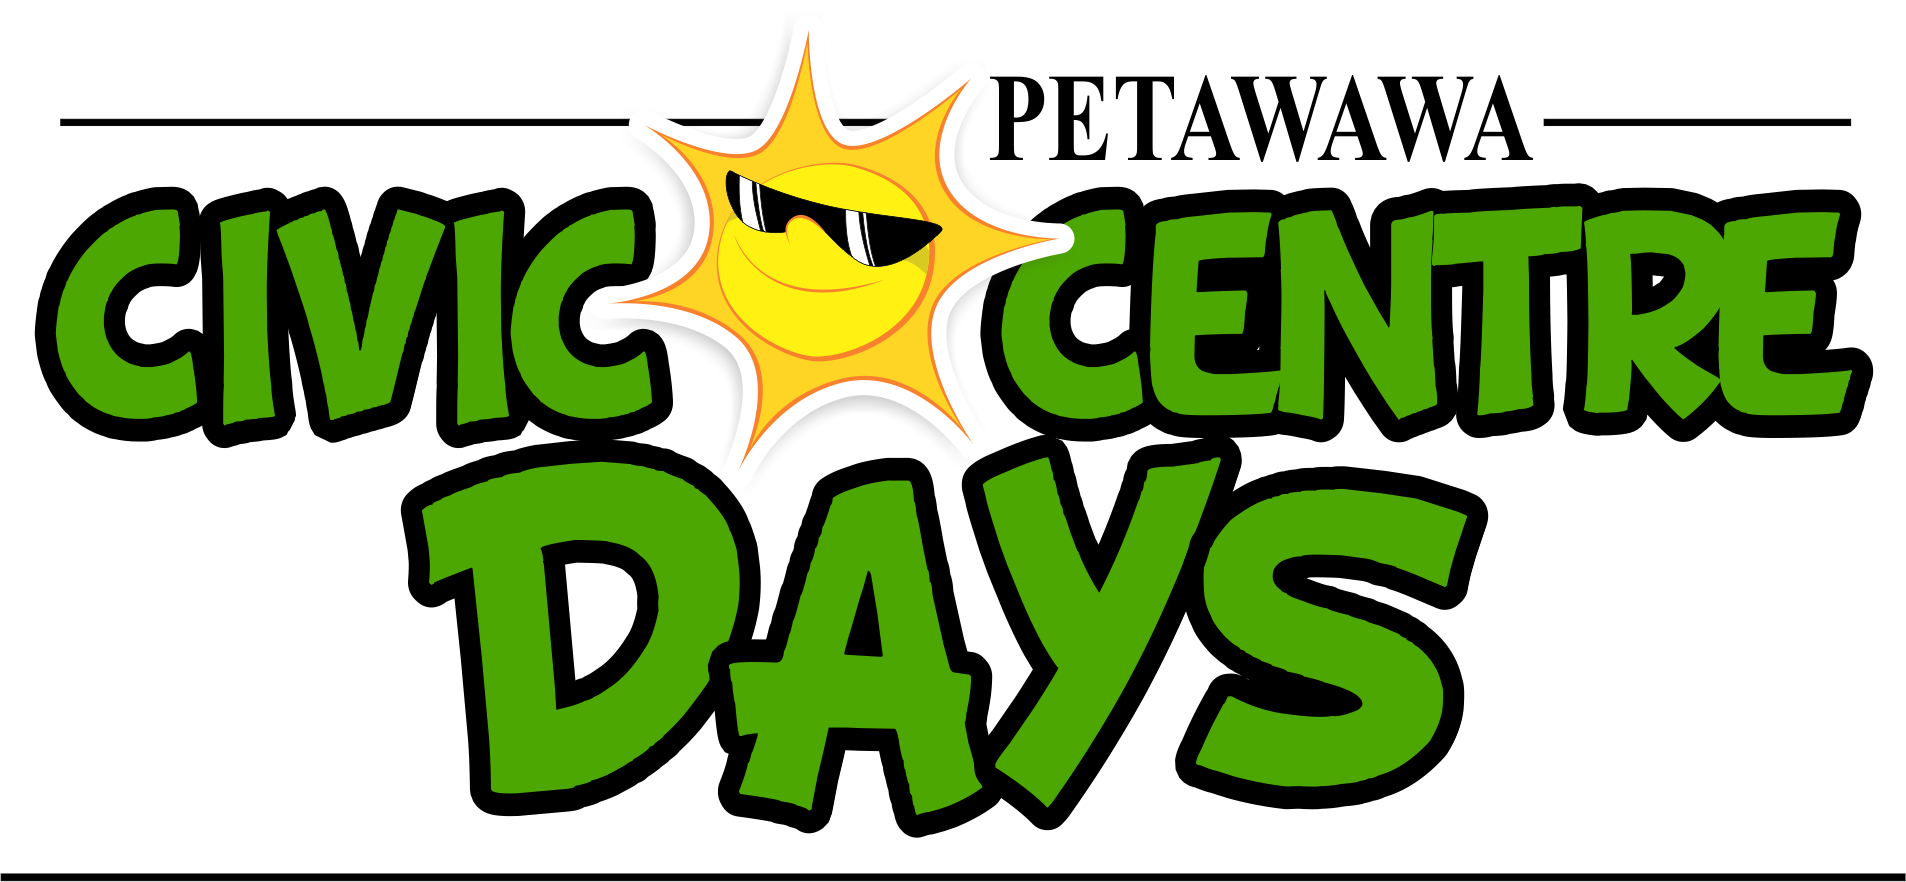 Petawawa Civic Centre Days Logo